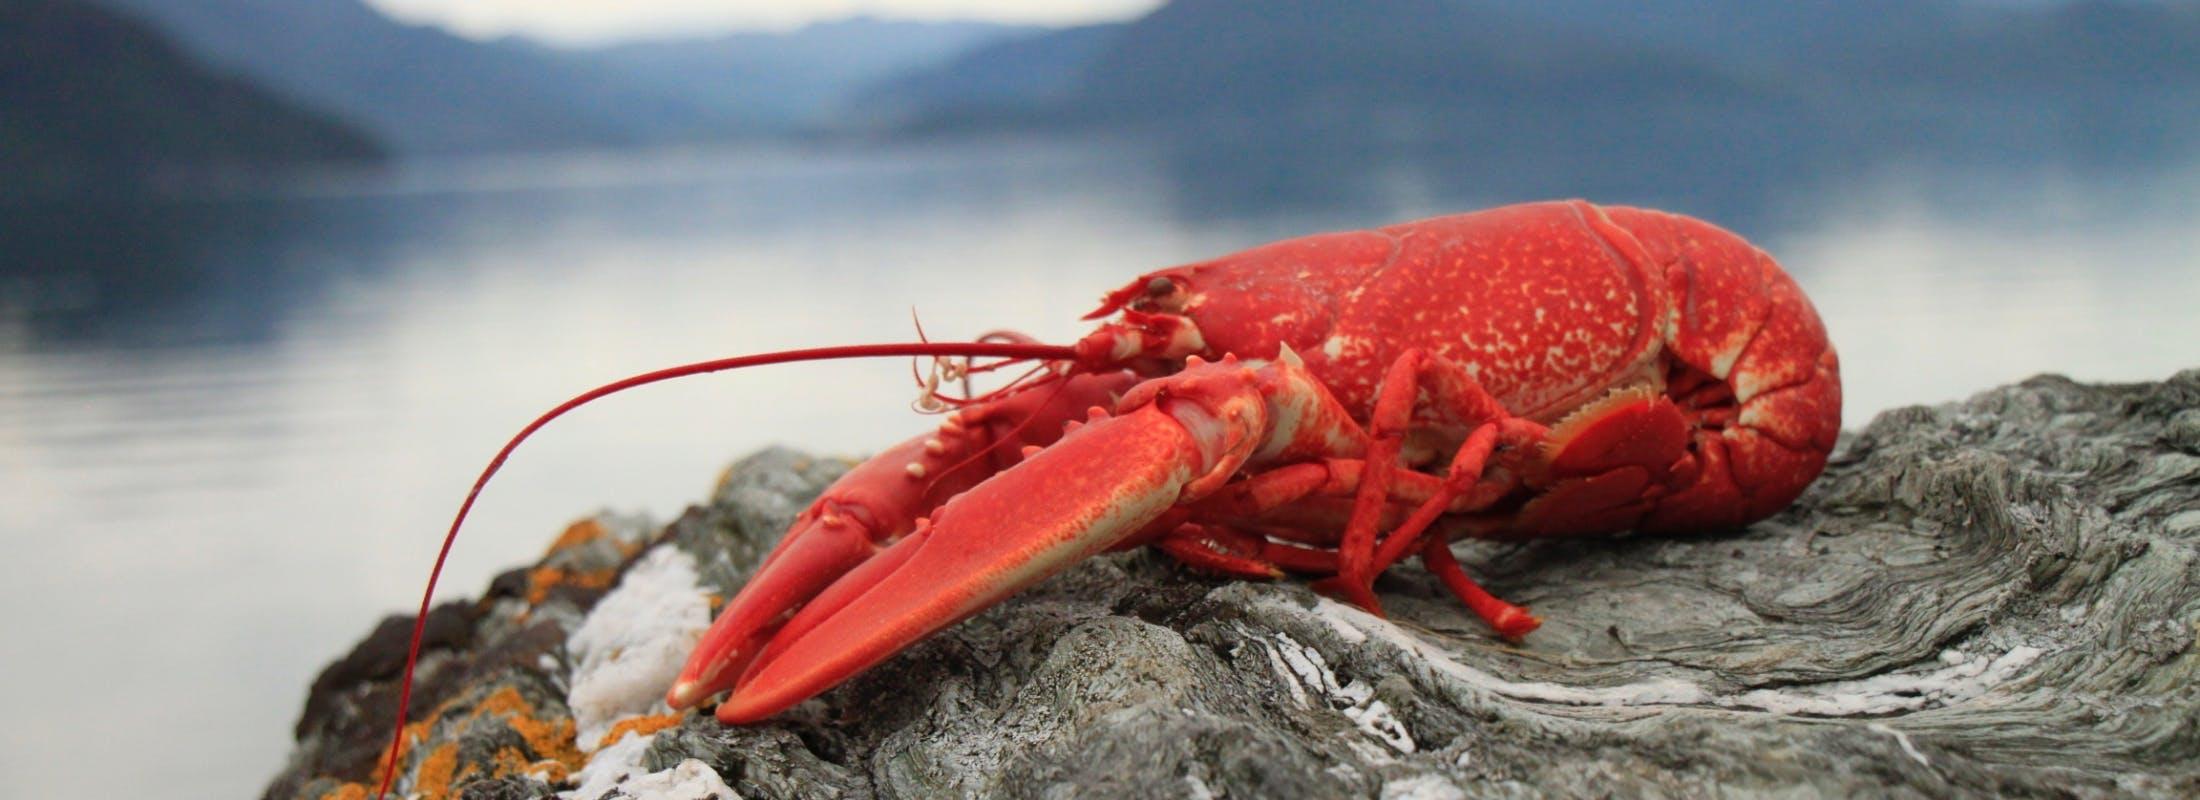 Red Lobster grows advisory roster as unlimited shrimp offering bites back